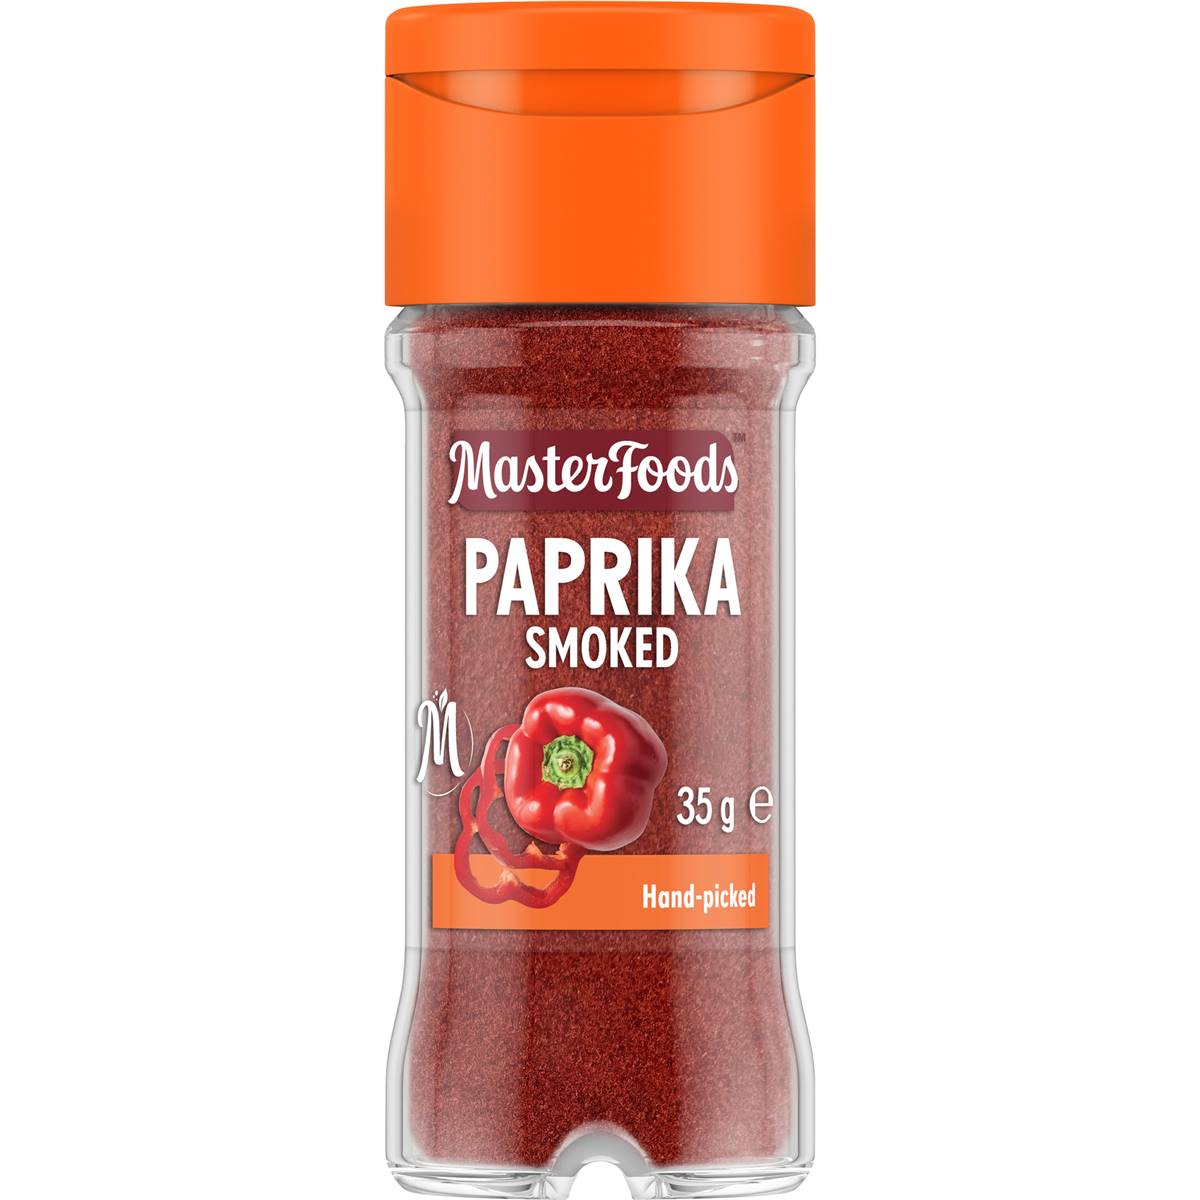 Calories in Masterfoods Smoked Paprika